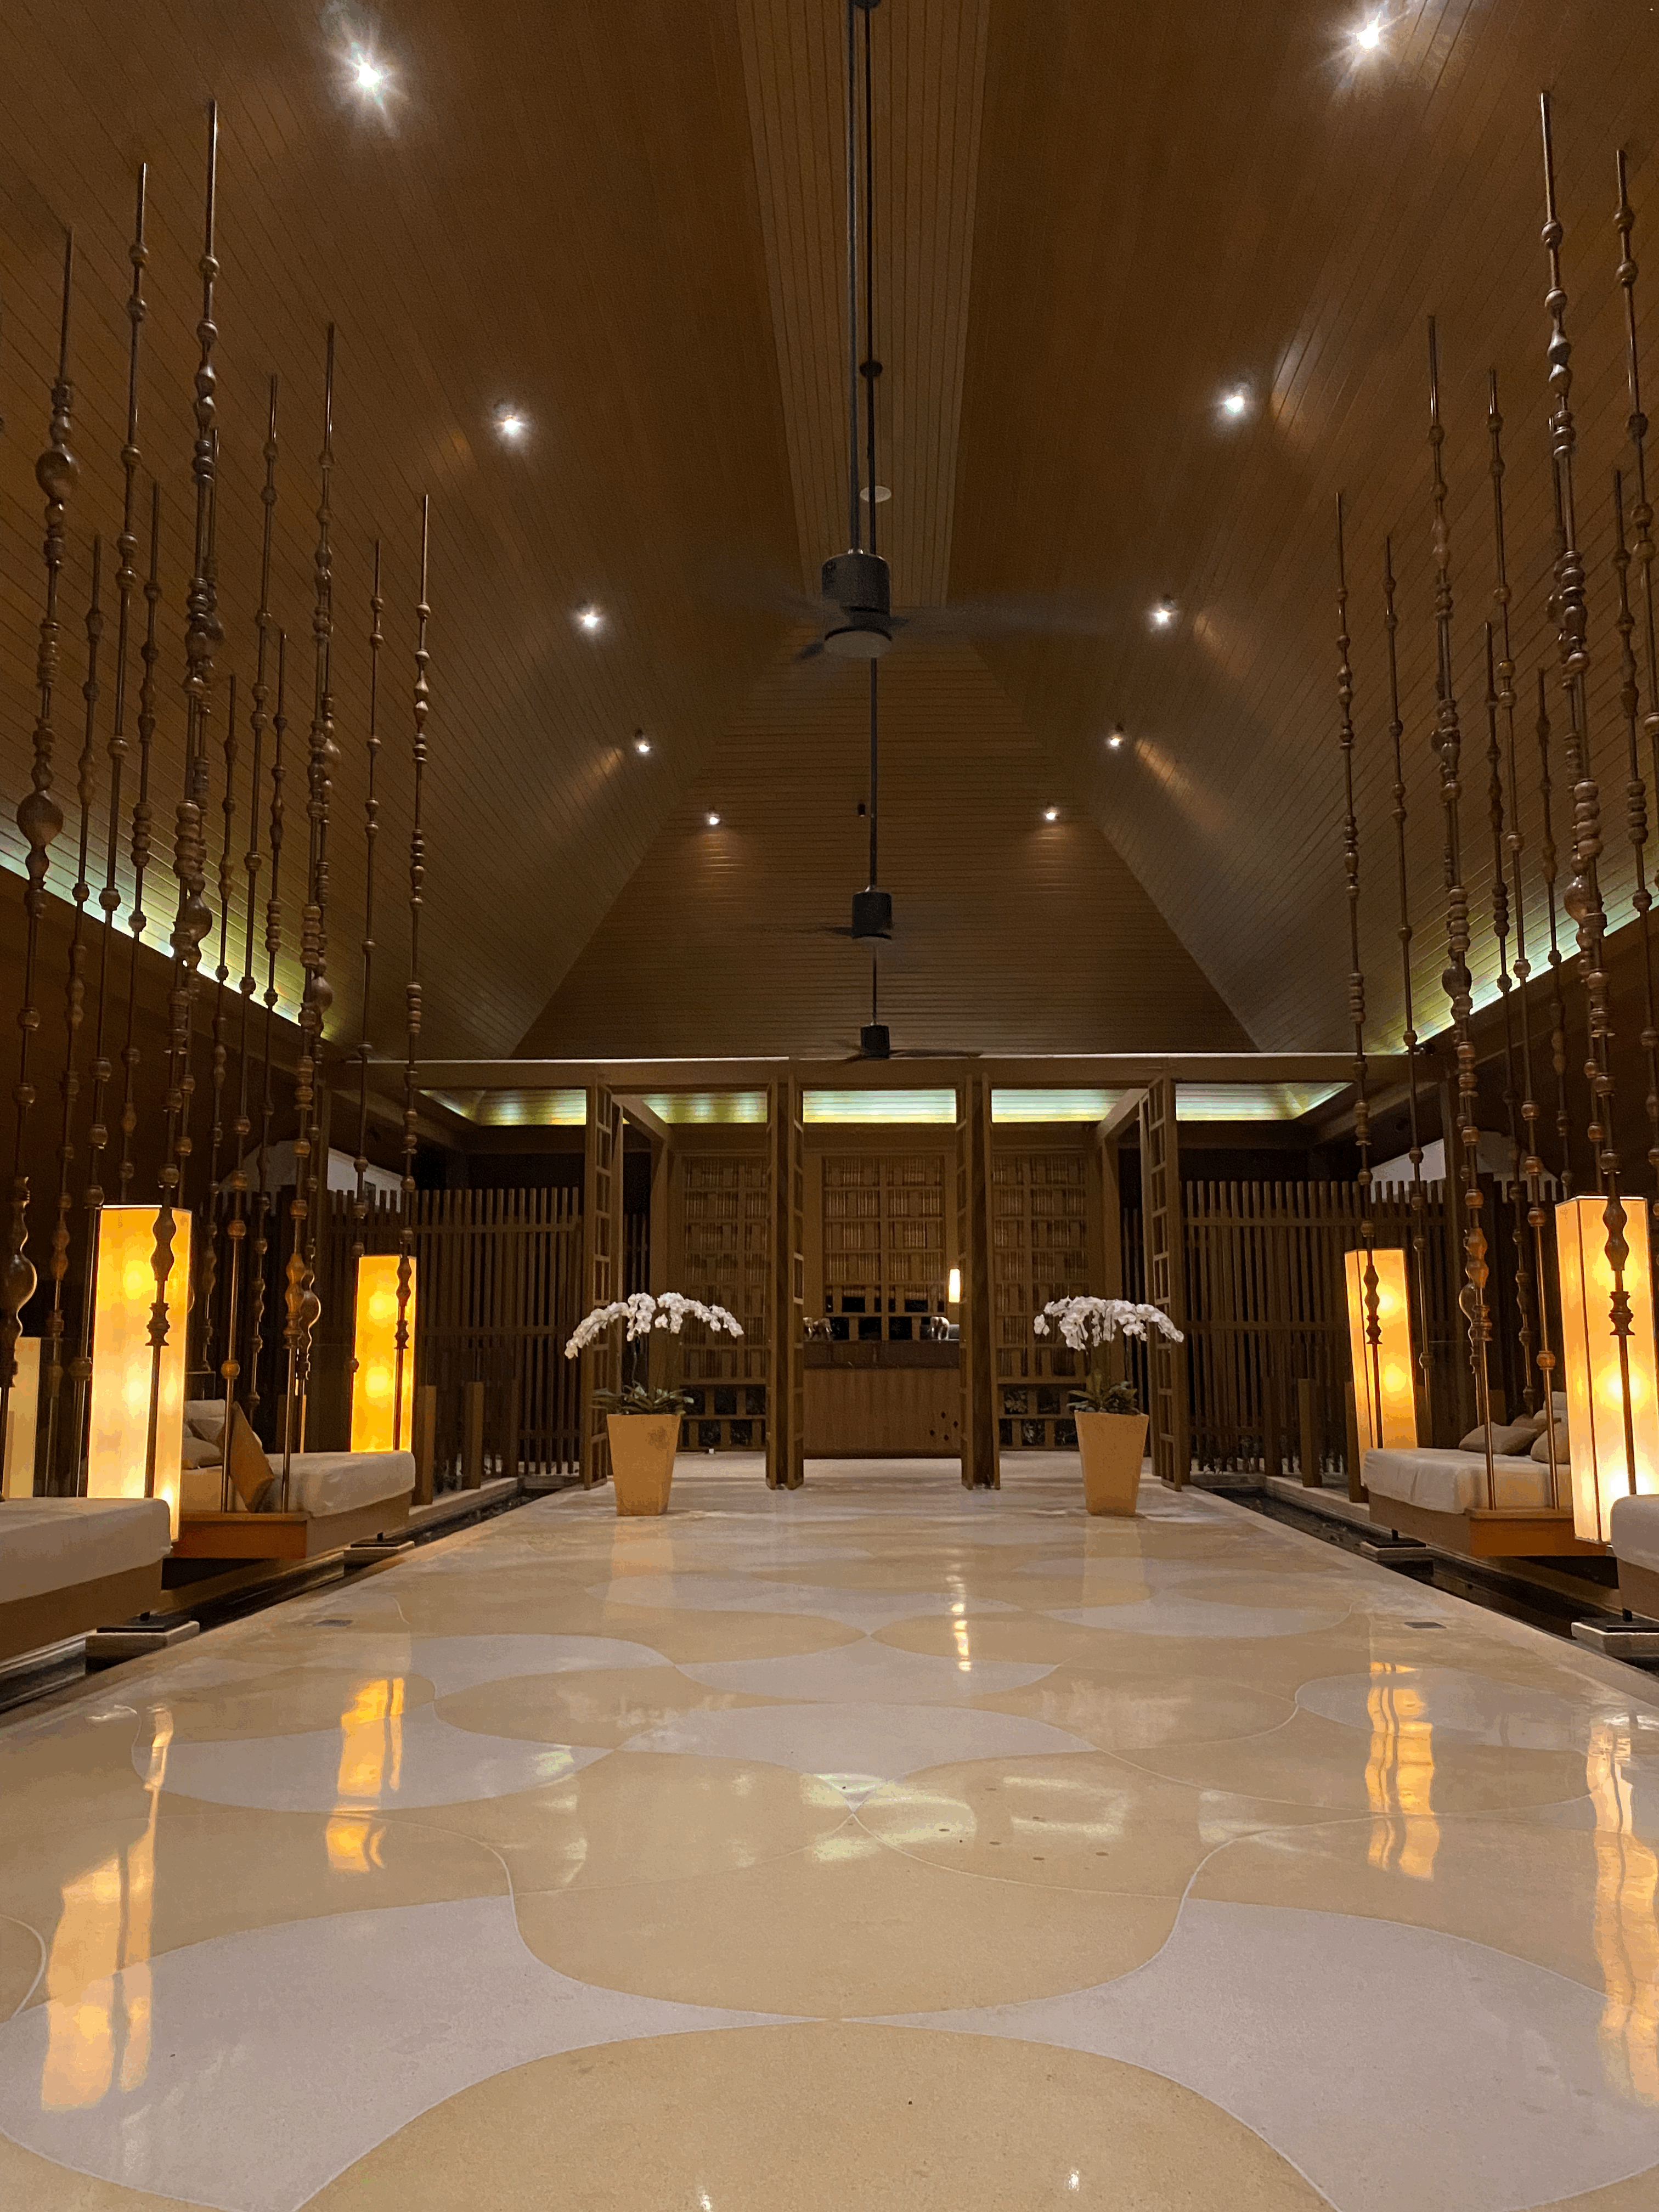 Resort Review: Ritz Carlton, Koh Samui